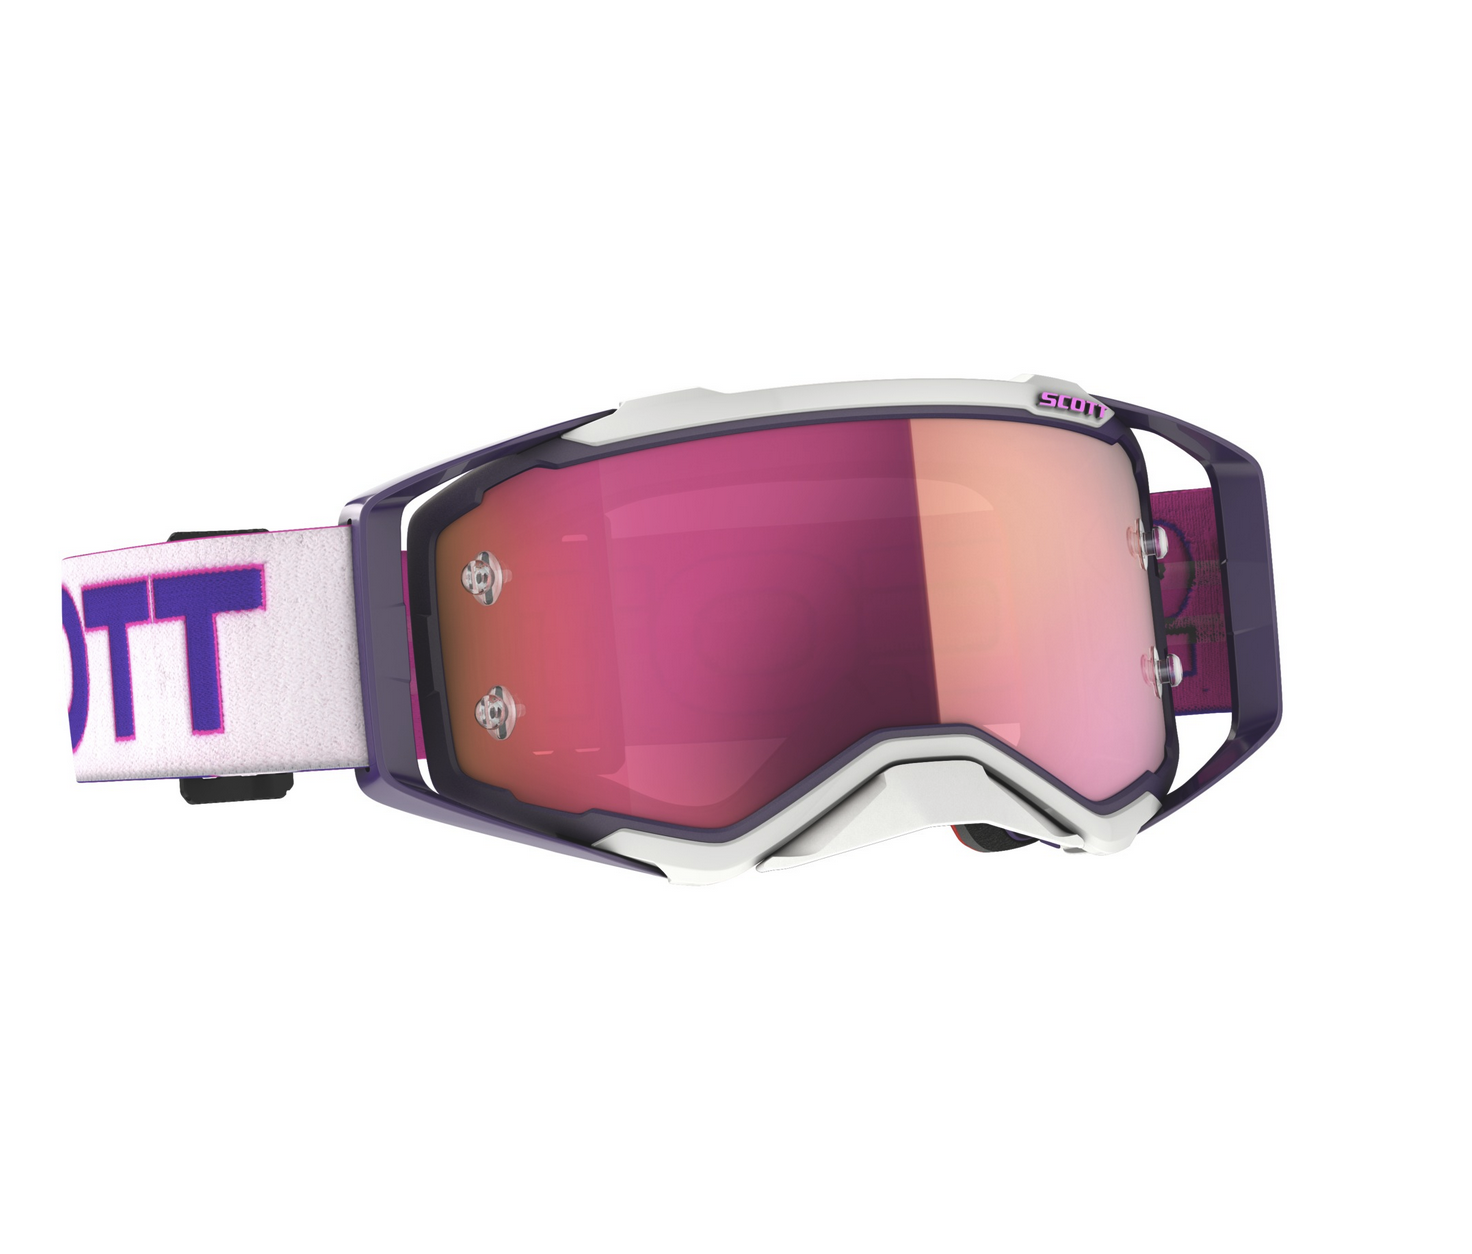 Occhiali (maschera) cross Scott PROSPECT purple pink lente pink chrome 1